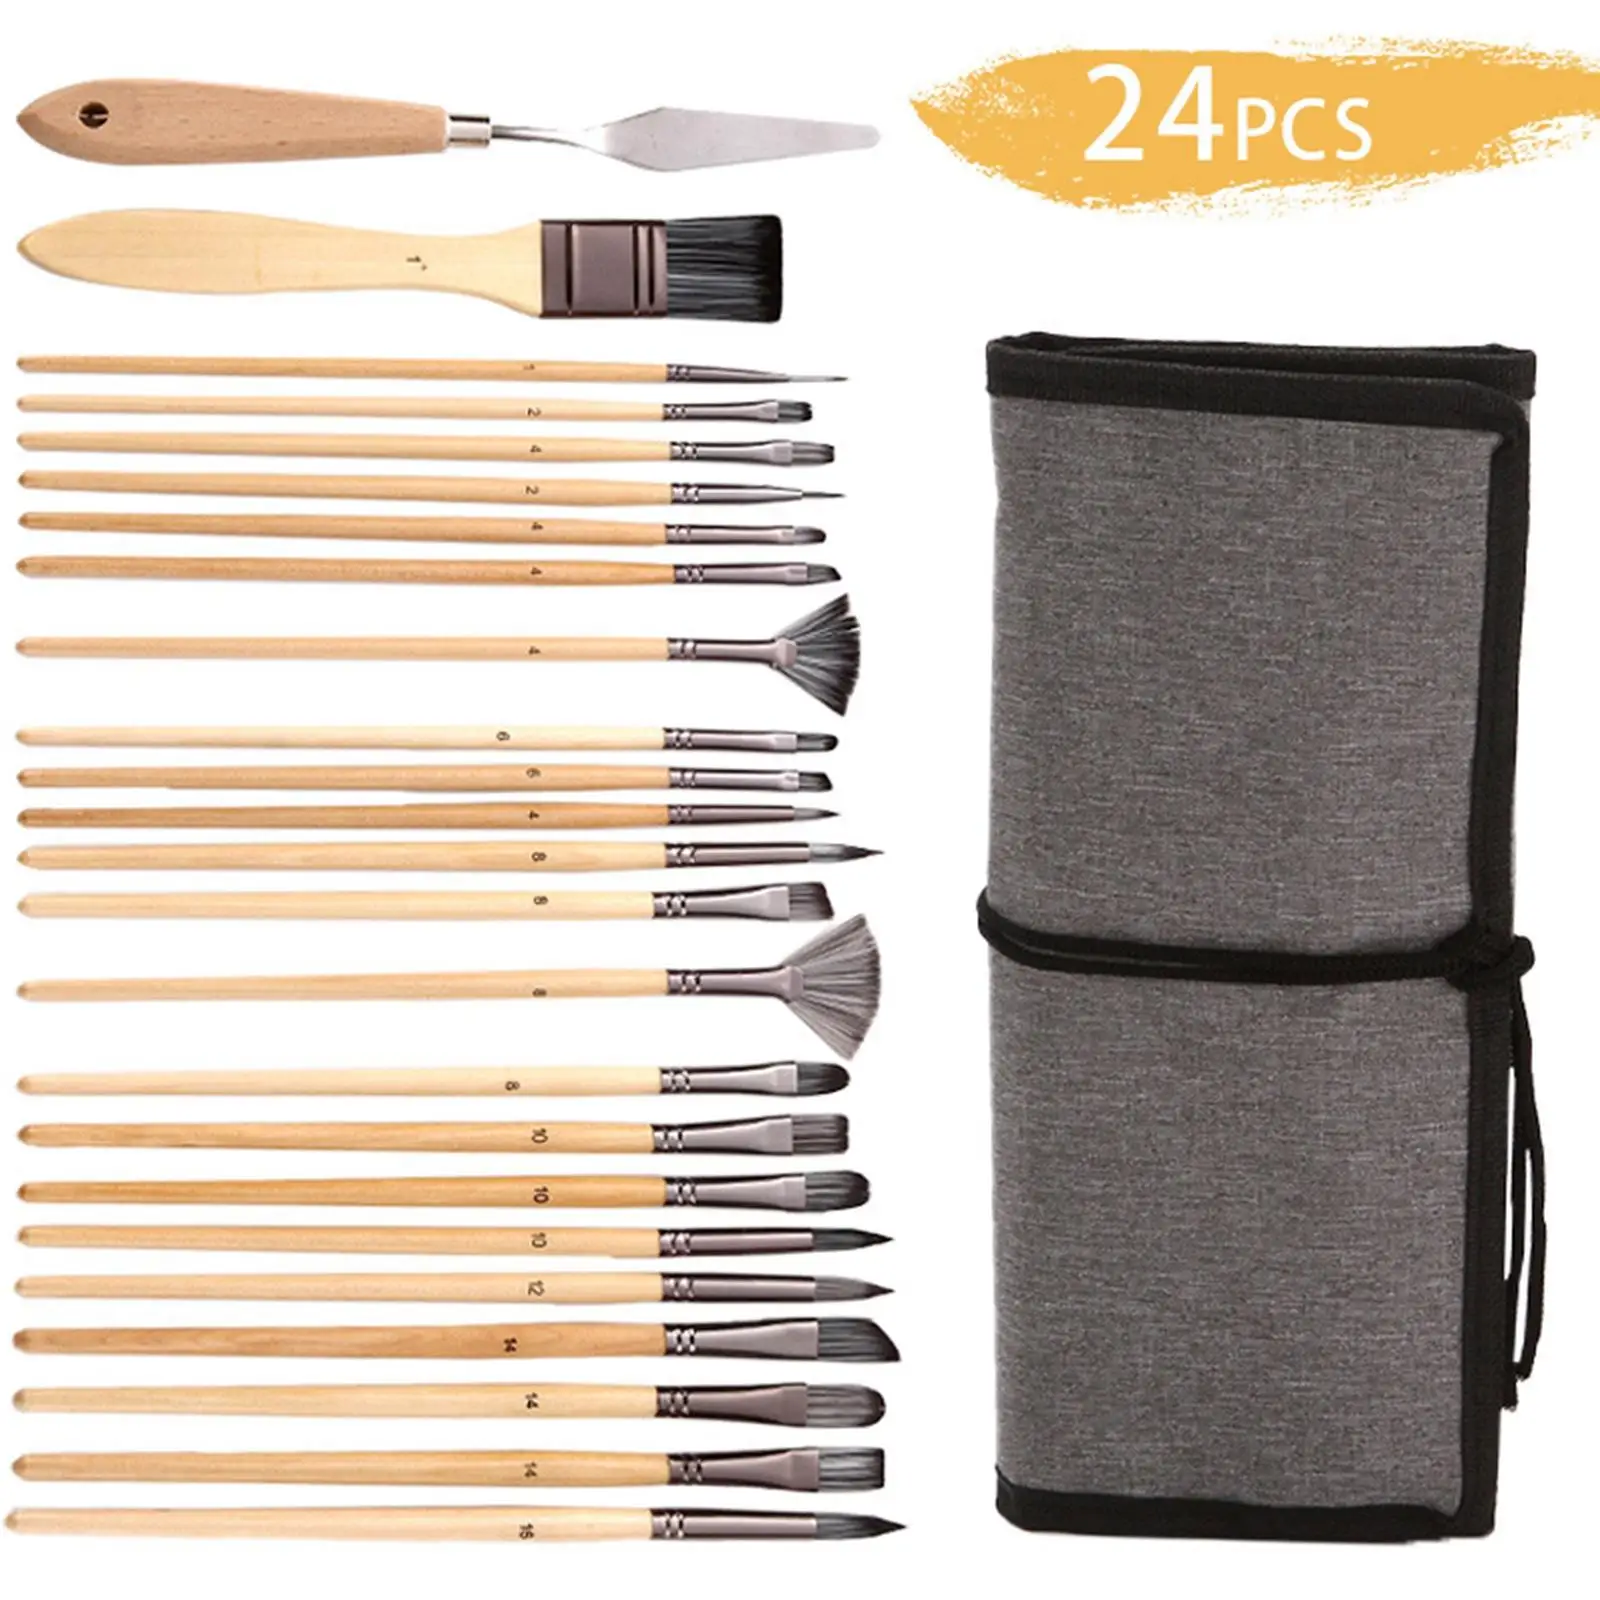 24pcs Artist Paint Brushes Set Nylon Hair Wood Handle for Acrylic Oil Watercolor Professional Art Painting Kit